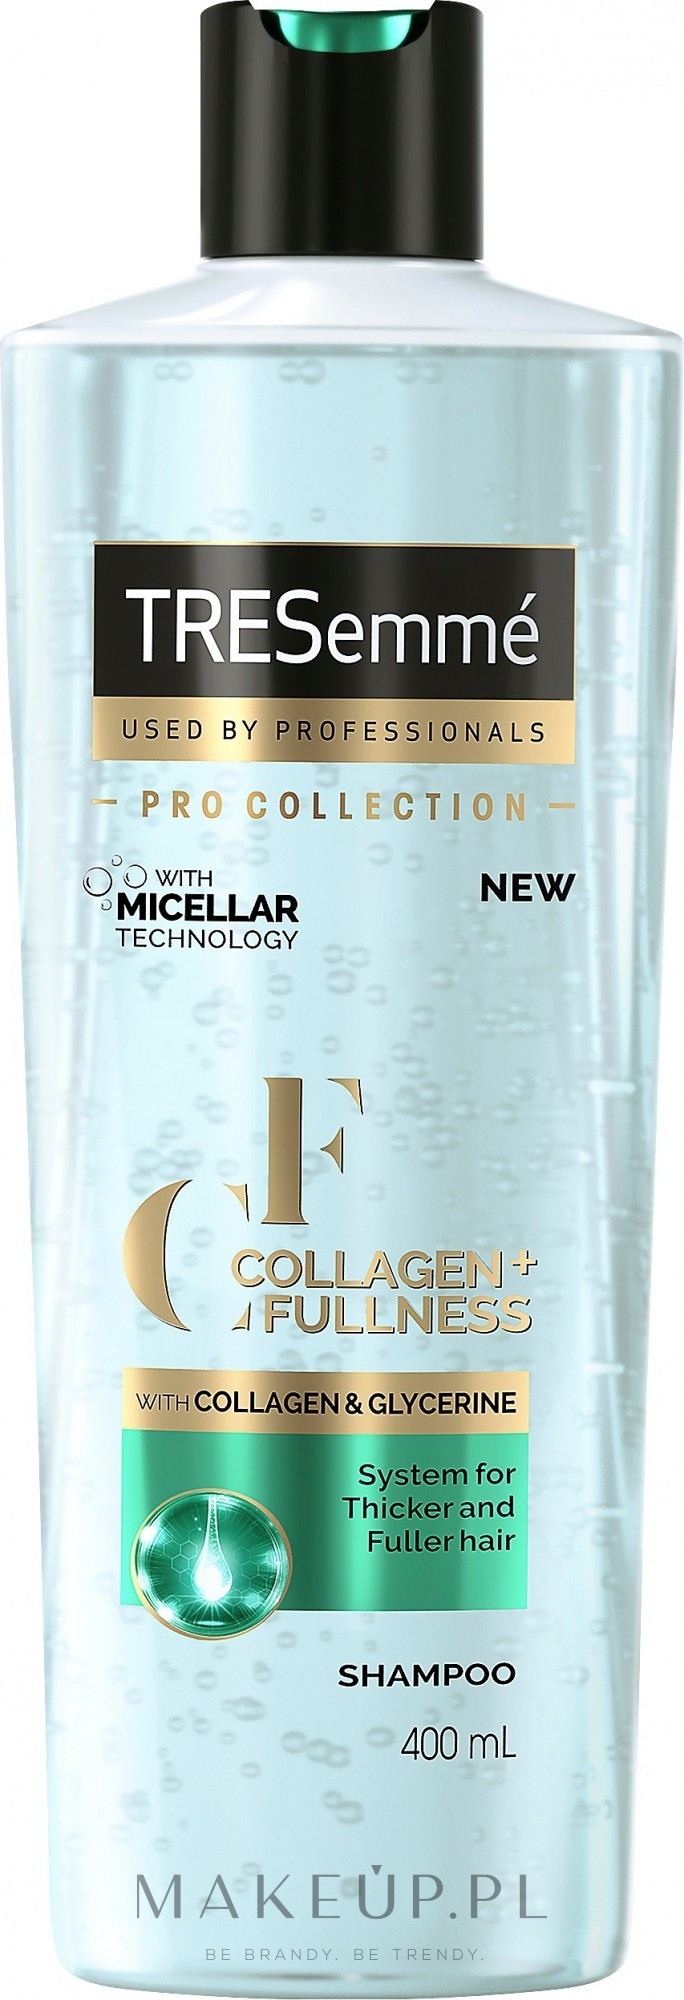 tresemme collagen & fullness szampon